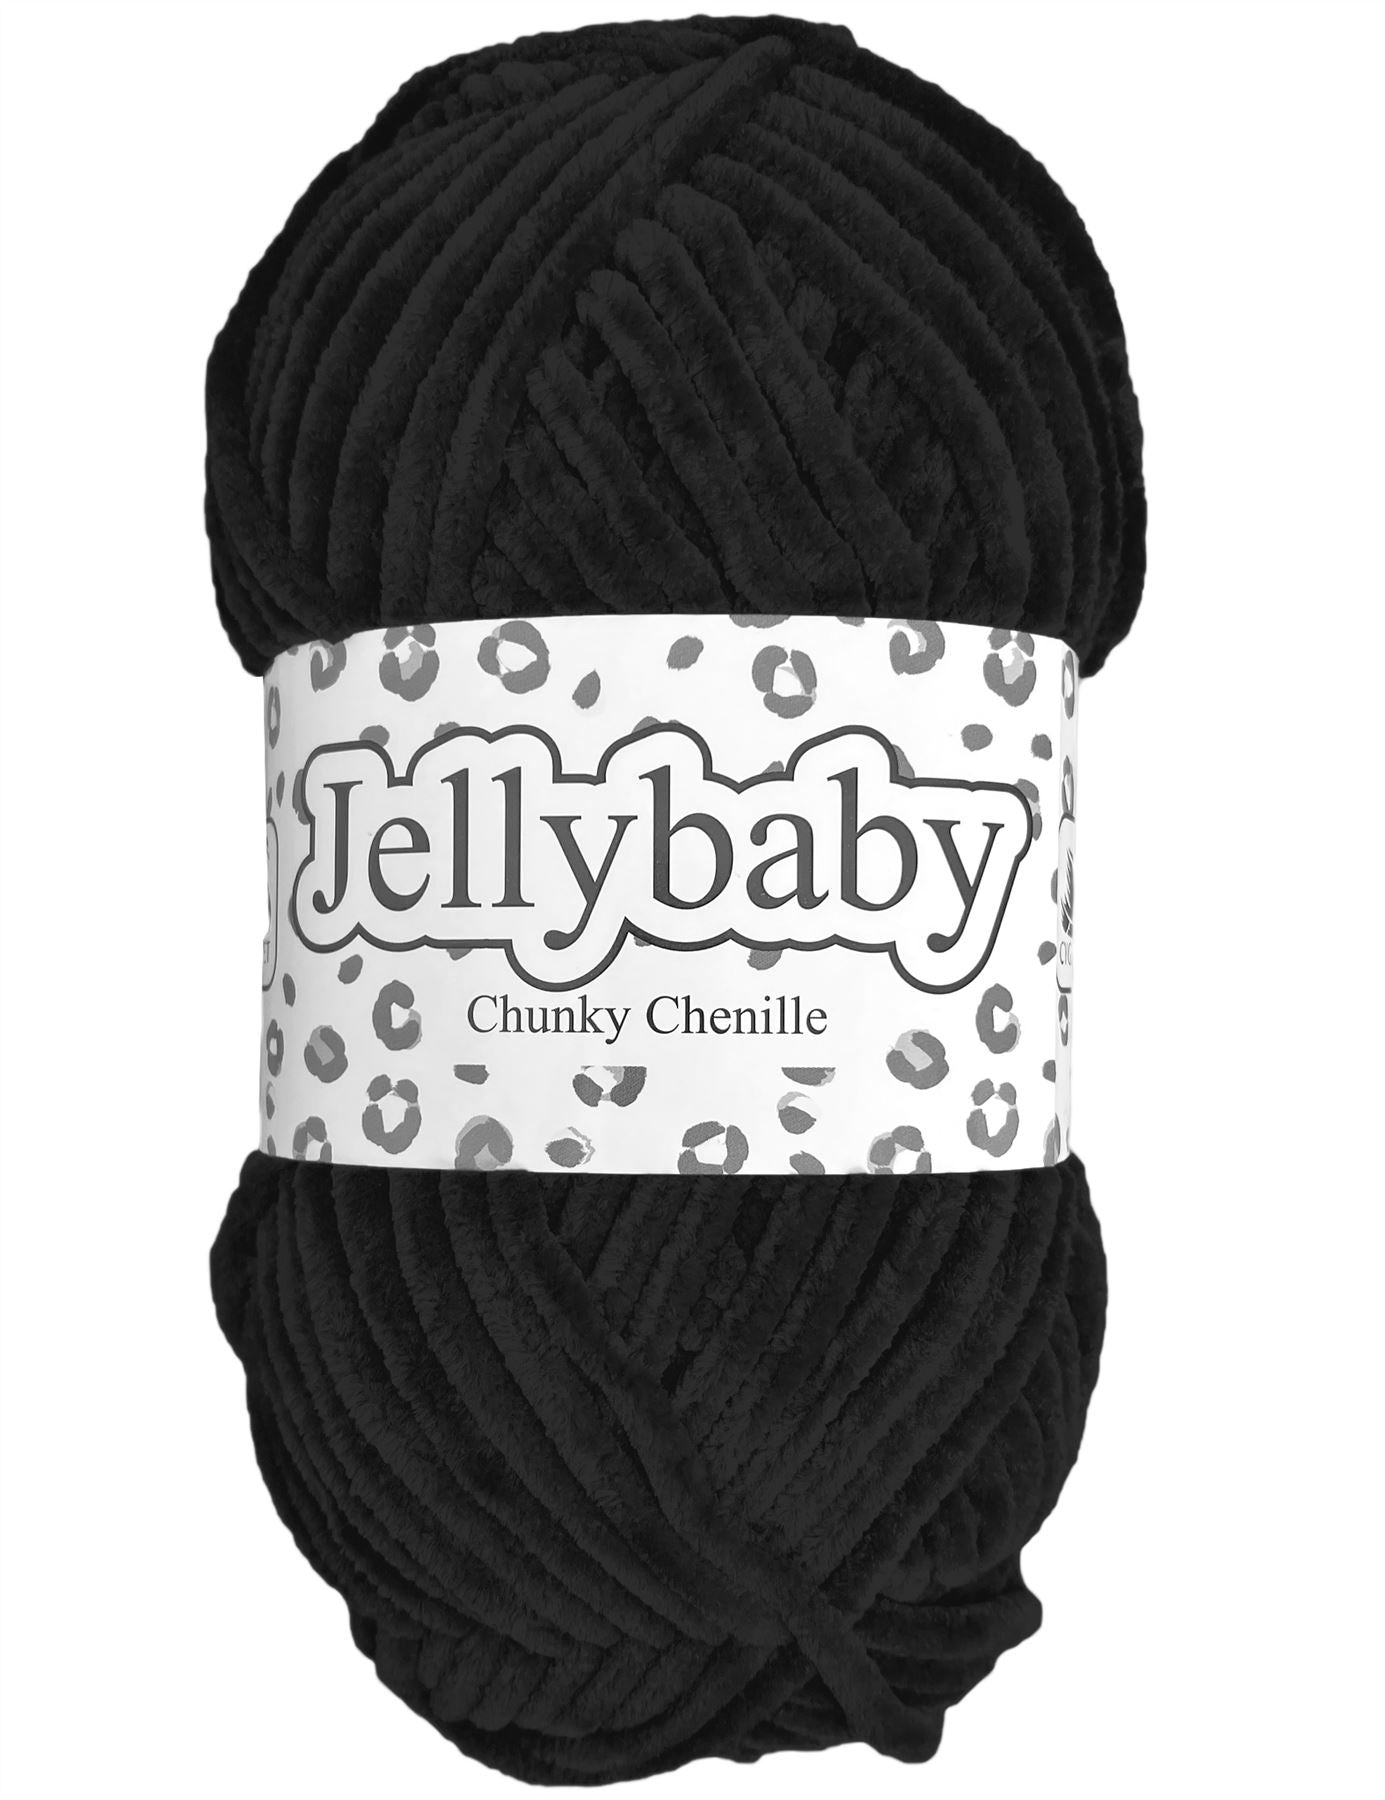 Cygnet Jellybaby Chenille Chunky Black (005) -100g